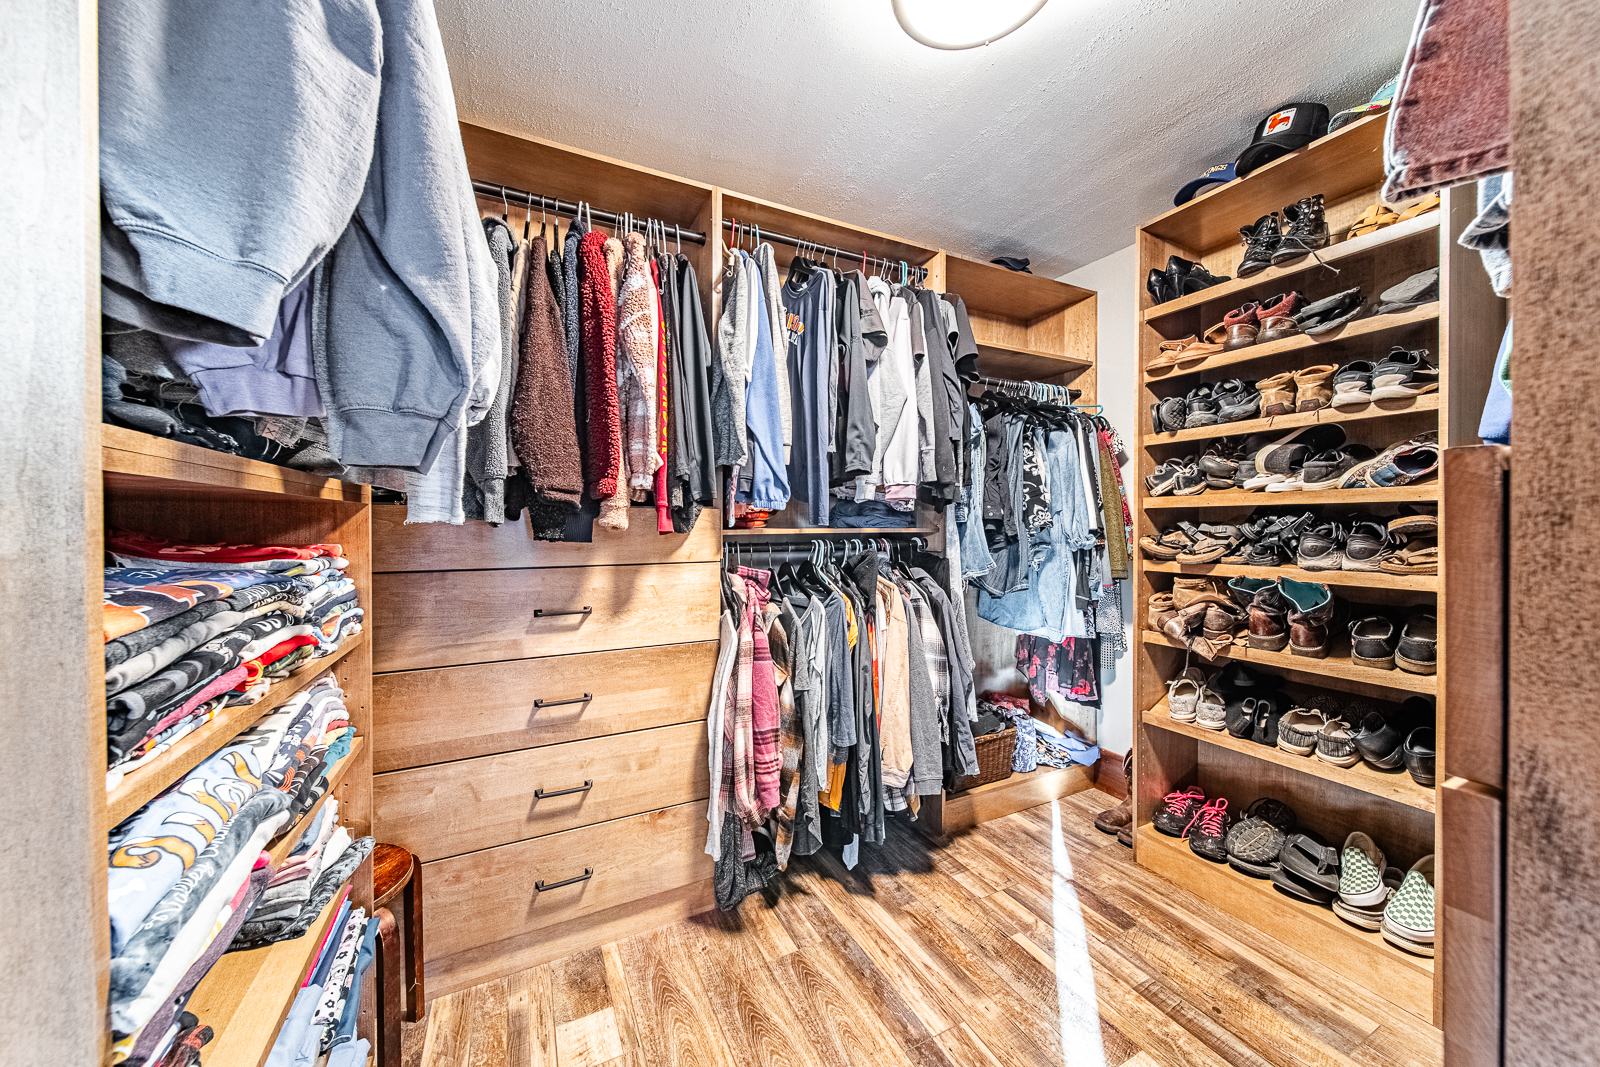 Innovative custom closet design in Lafayette home's master bedroom for optimal organization.